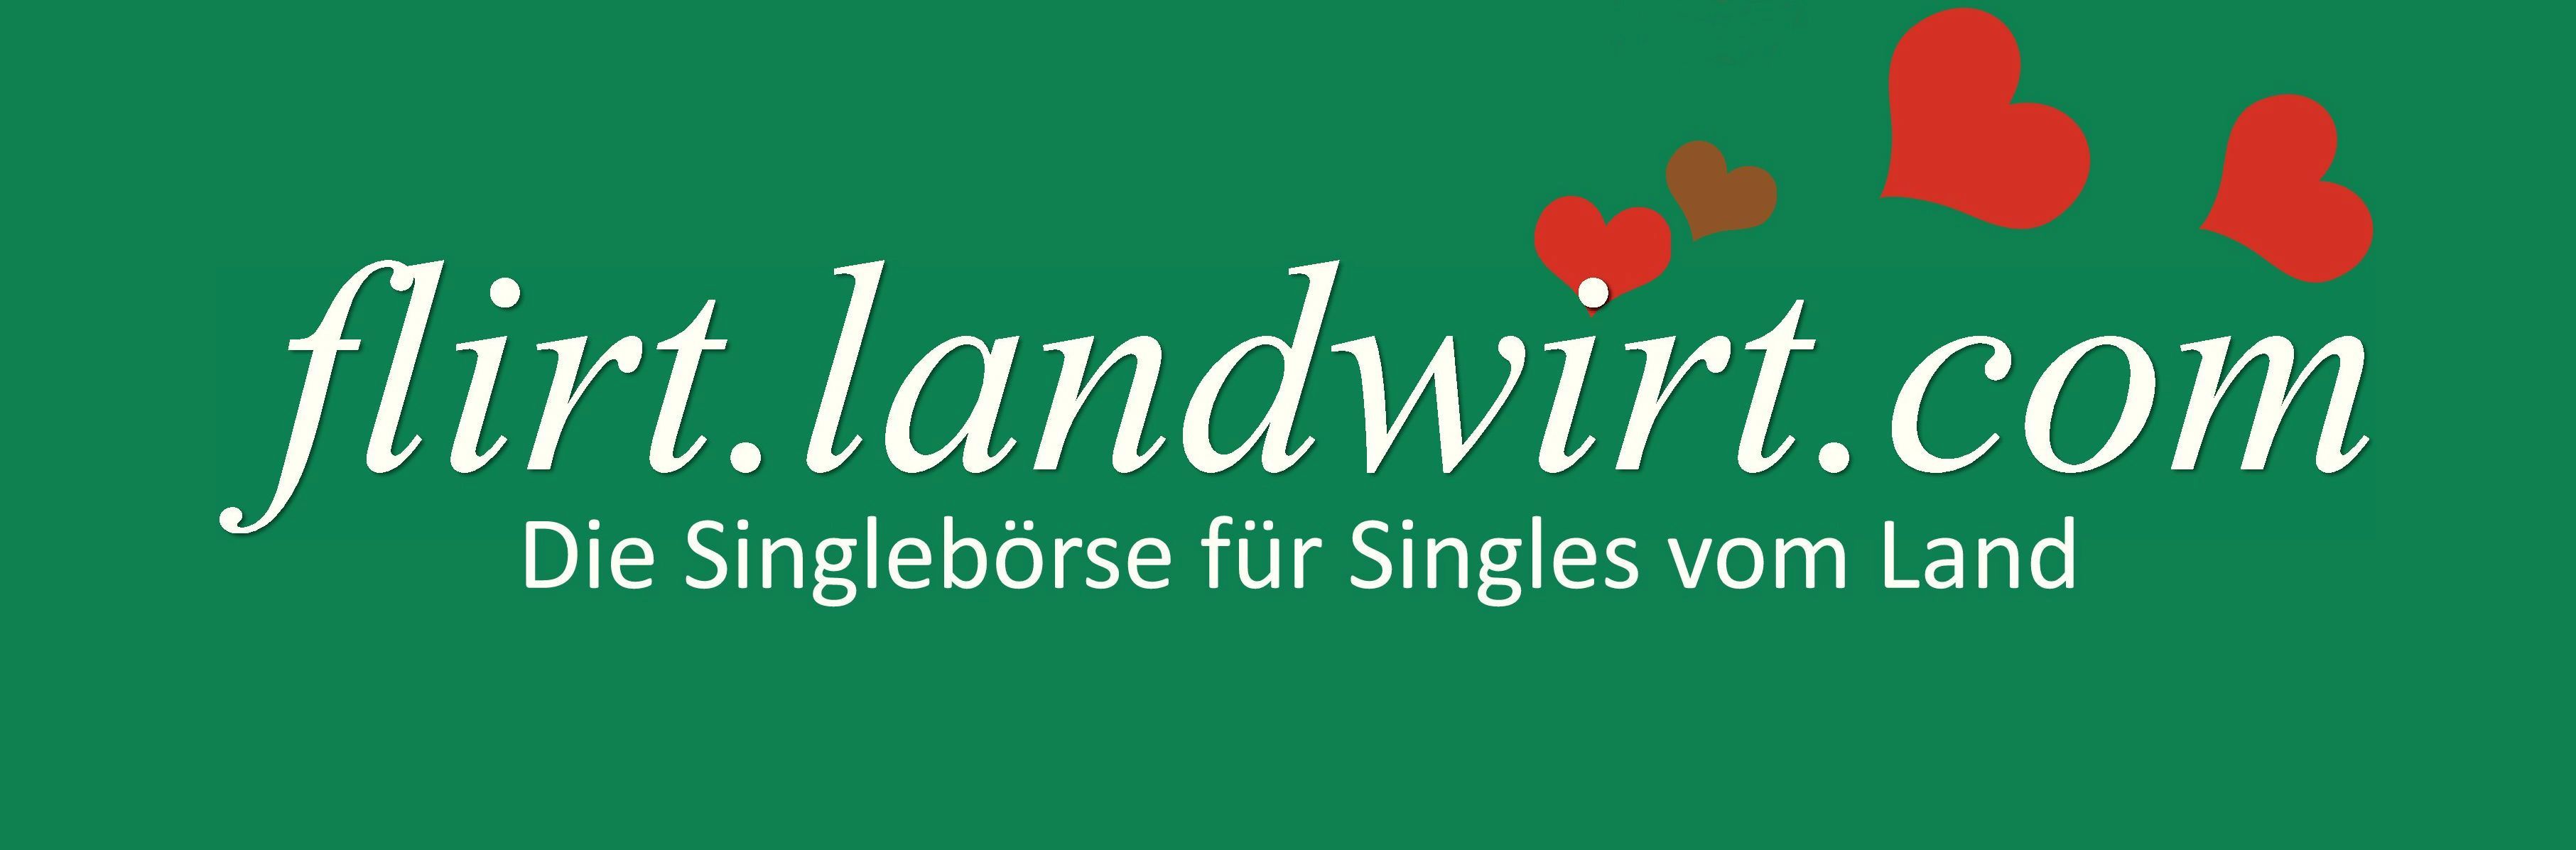 Aschbach-markt dates - Gries slow dating